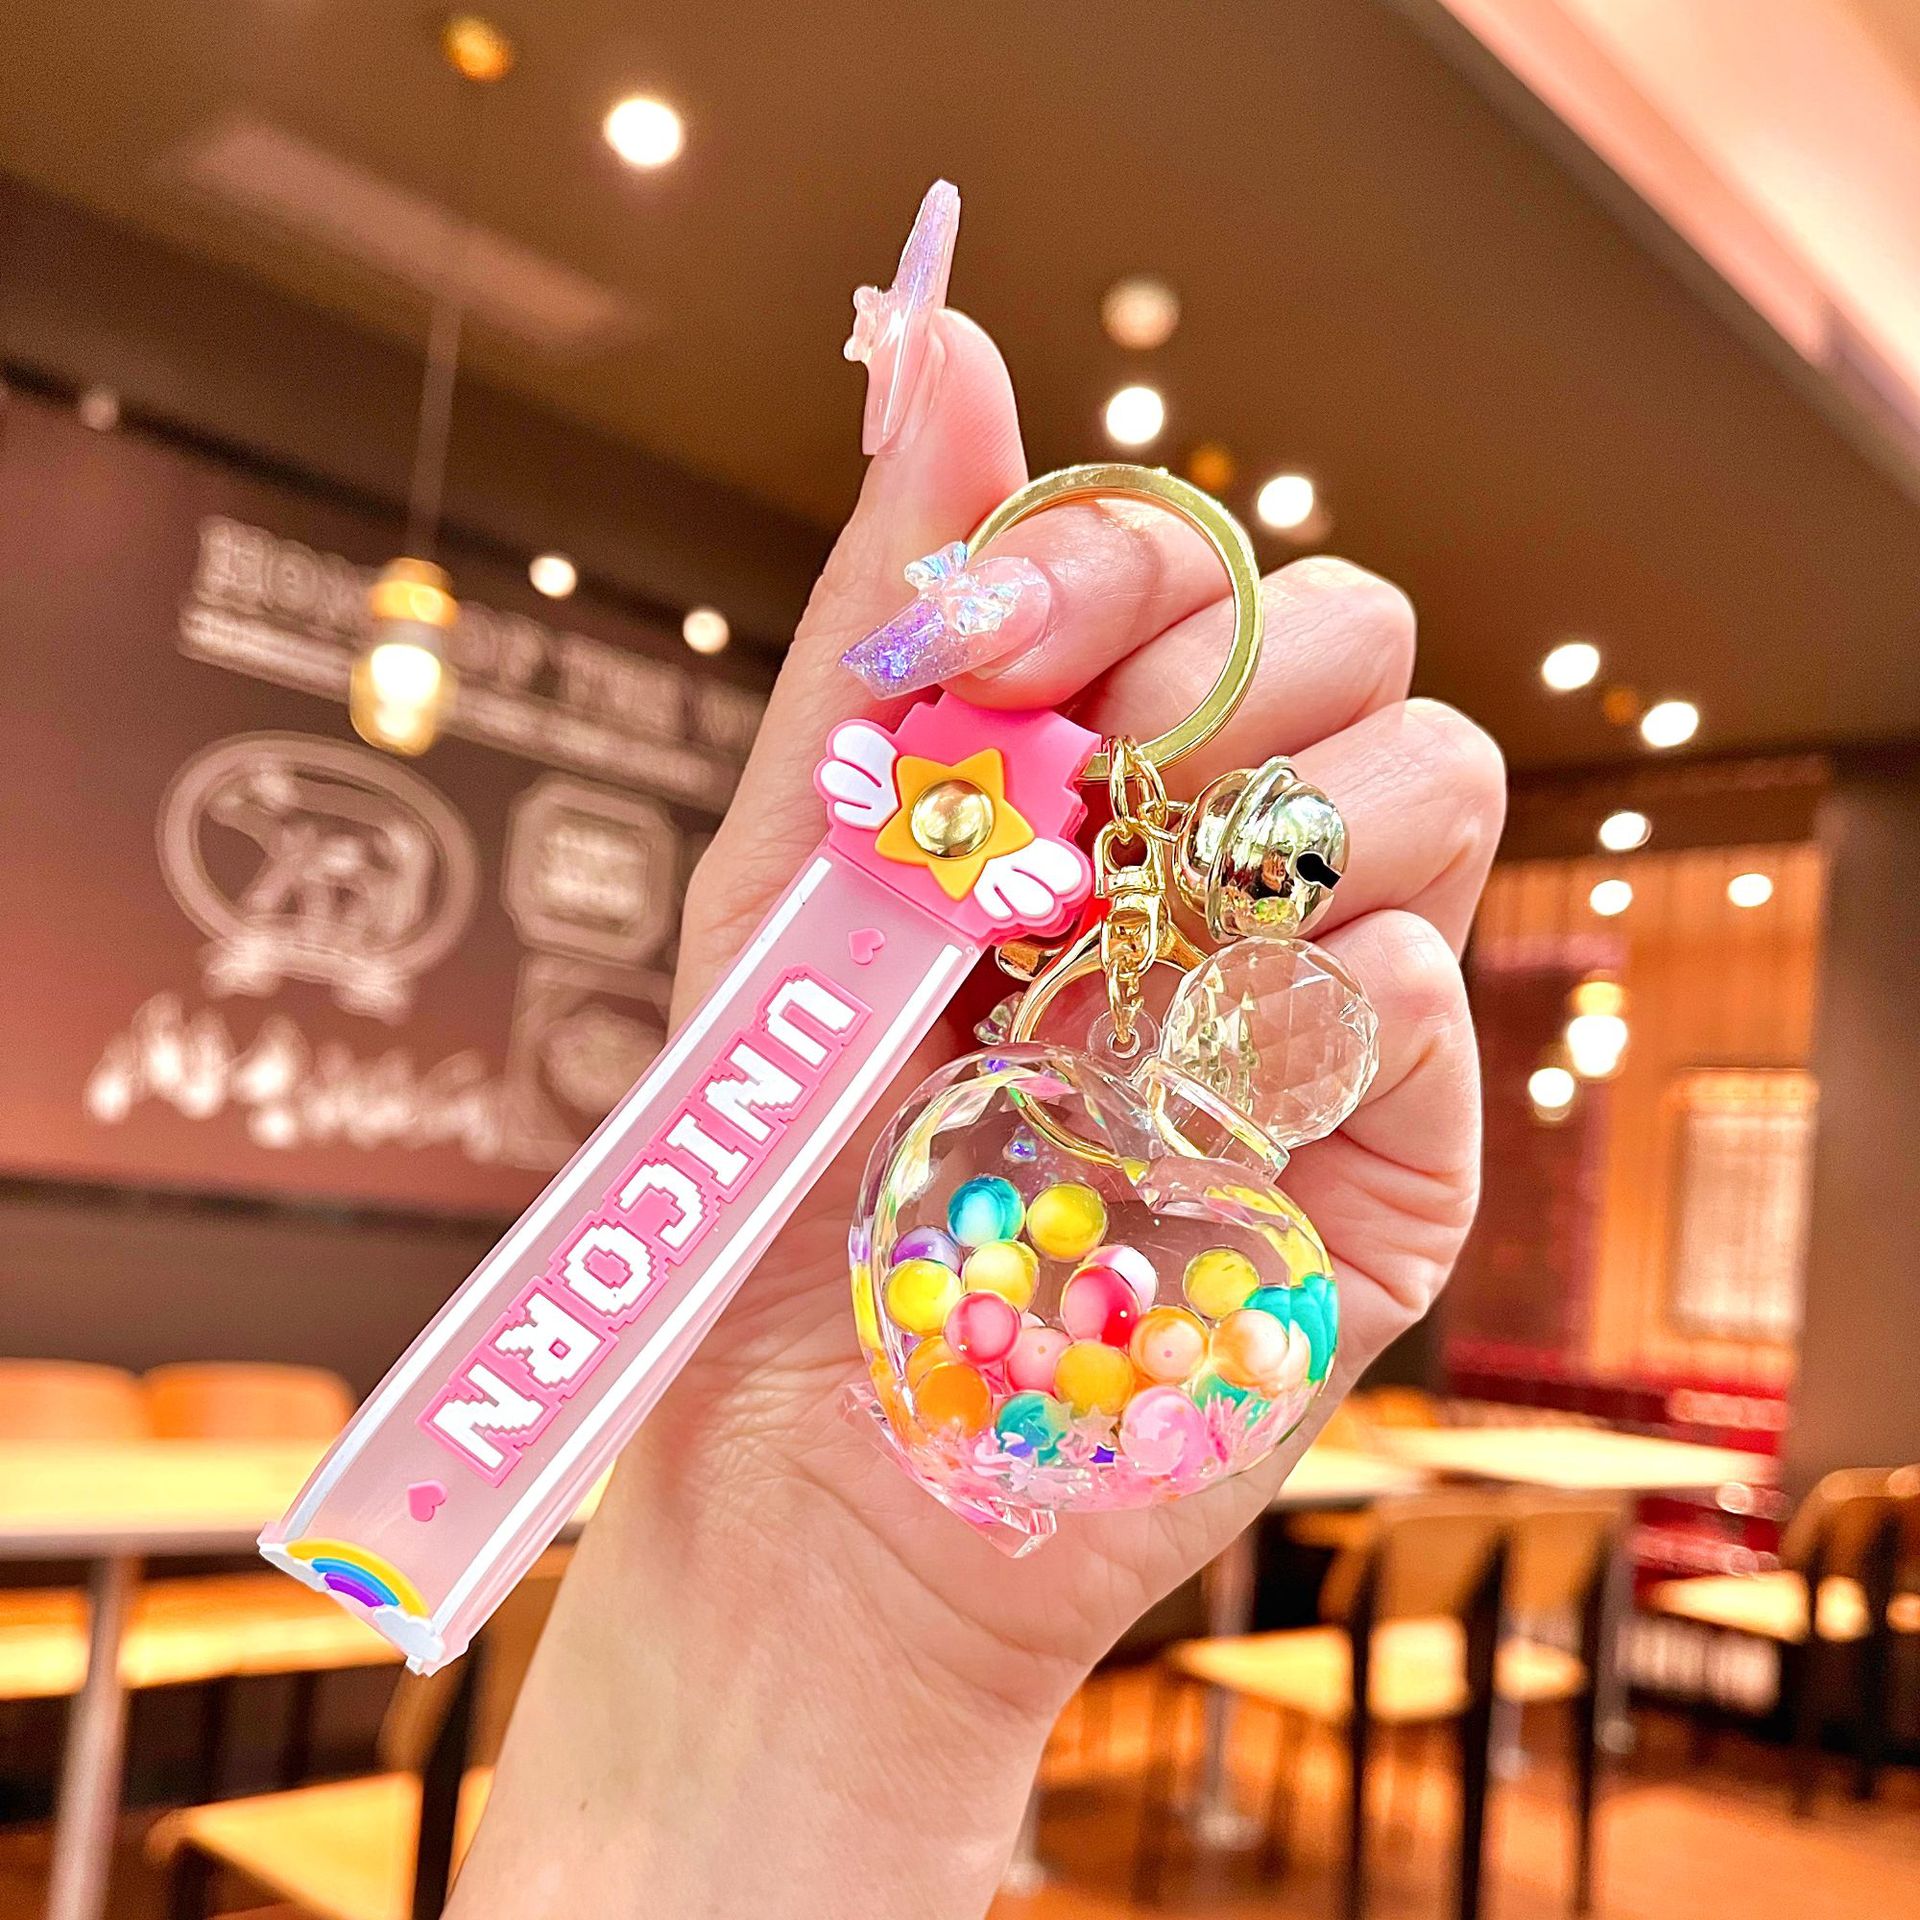 CRIZAN Cute Animal Keychain Key Ring Handbag Bag Charm Car Cell Phone Decor  Ornament